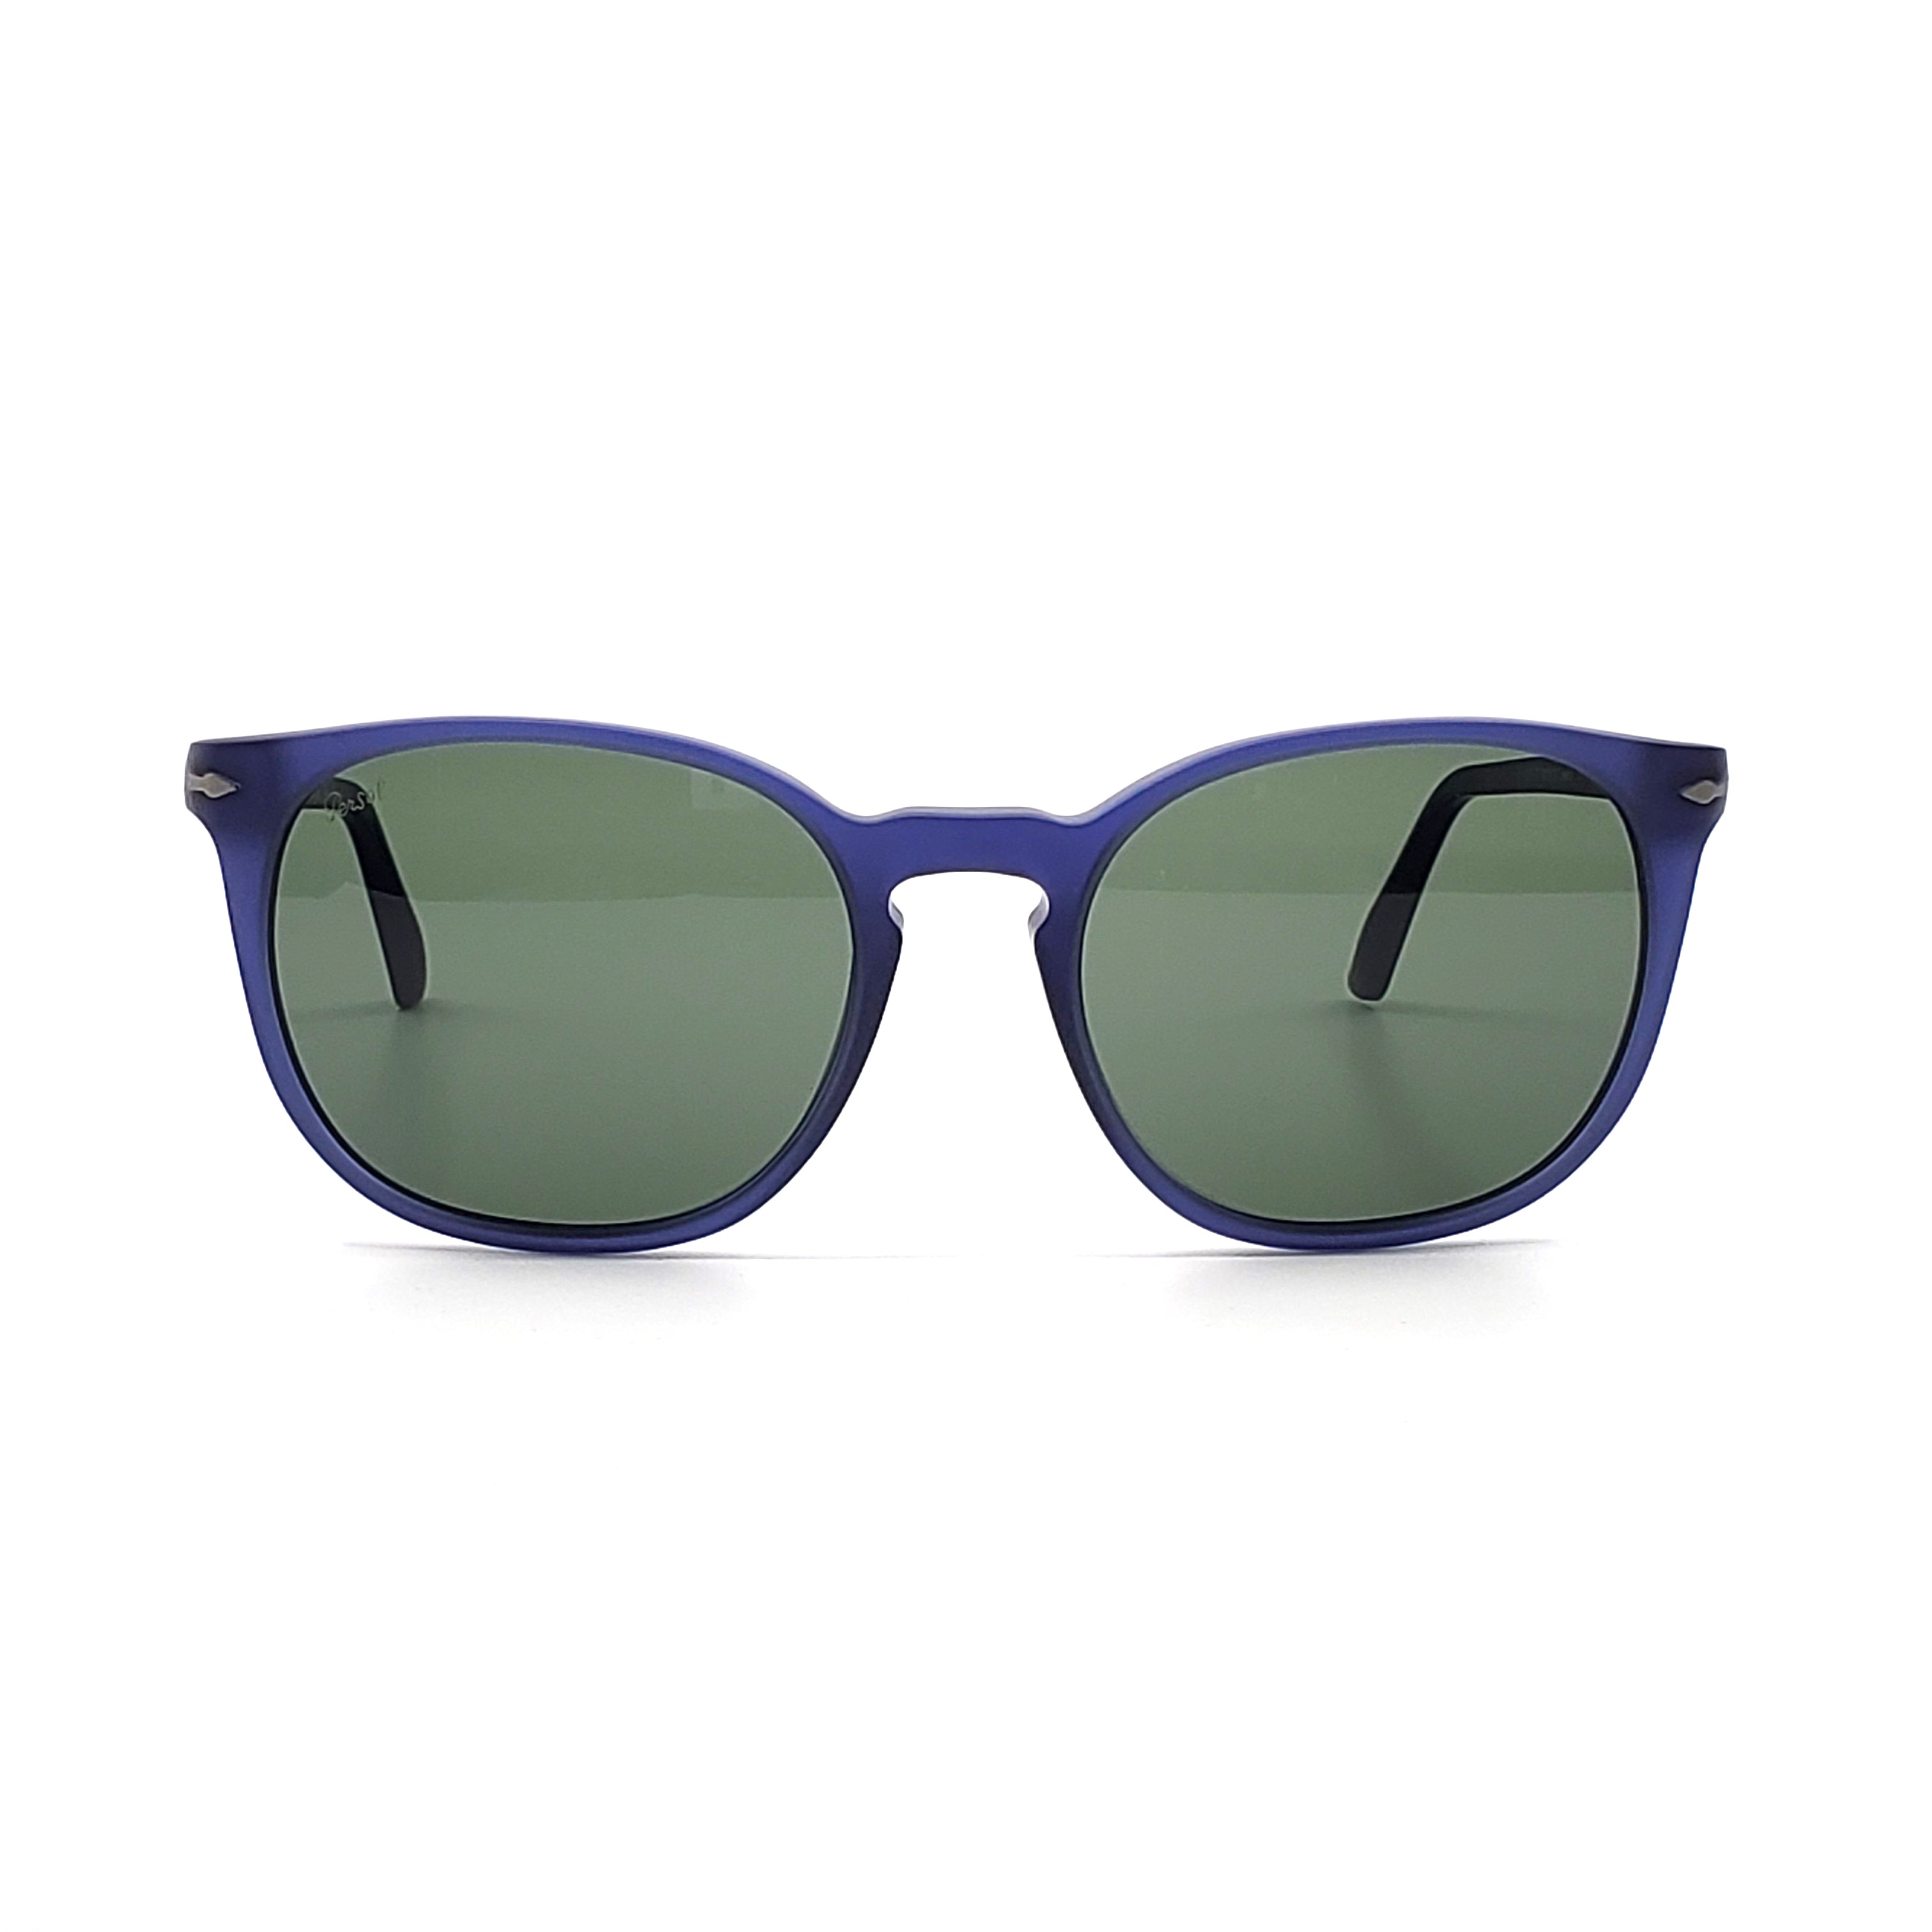 Persol Sunglasses - PO3007S Cobalt